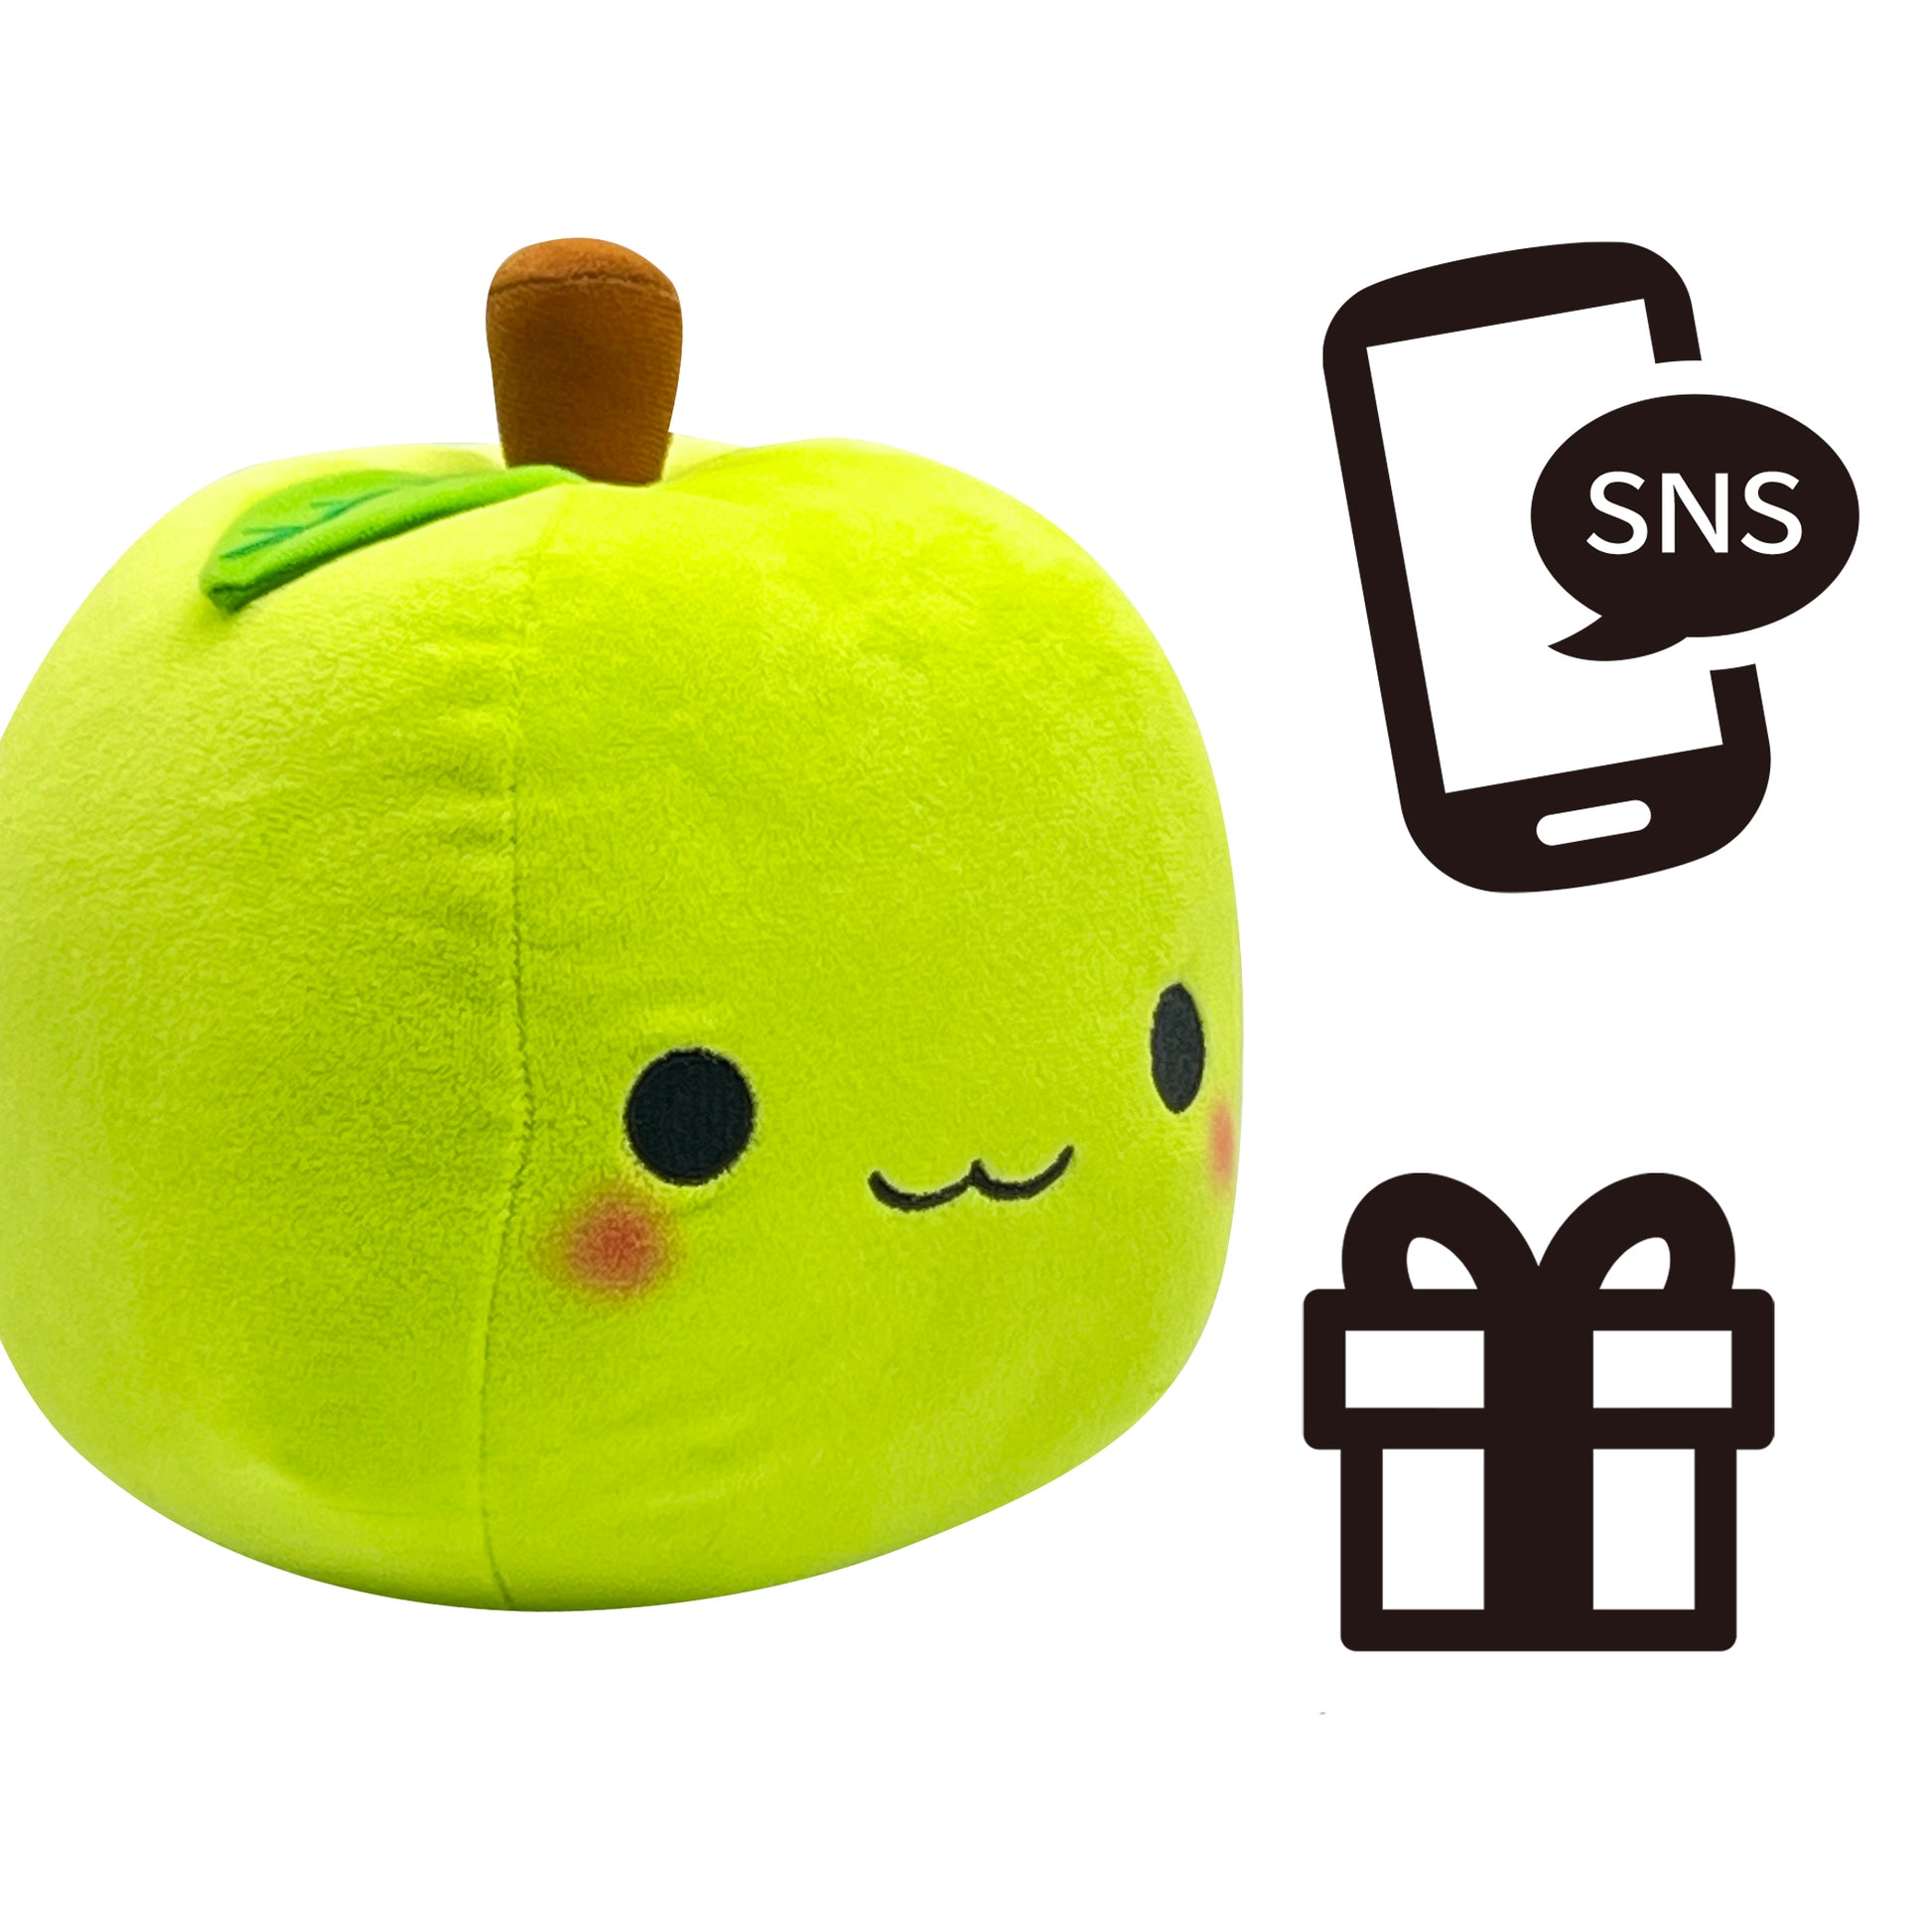 Pictogram of Apple Fruit Stuffed Toy Ringochan Green